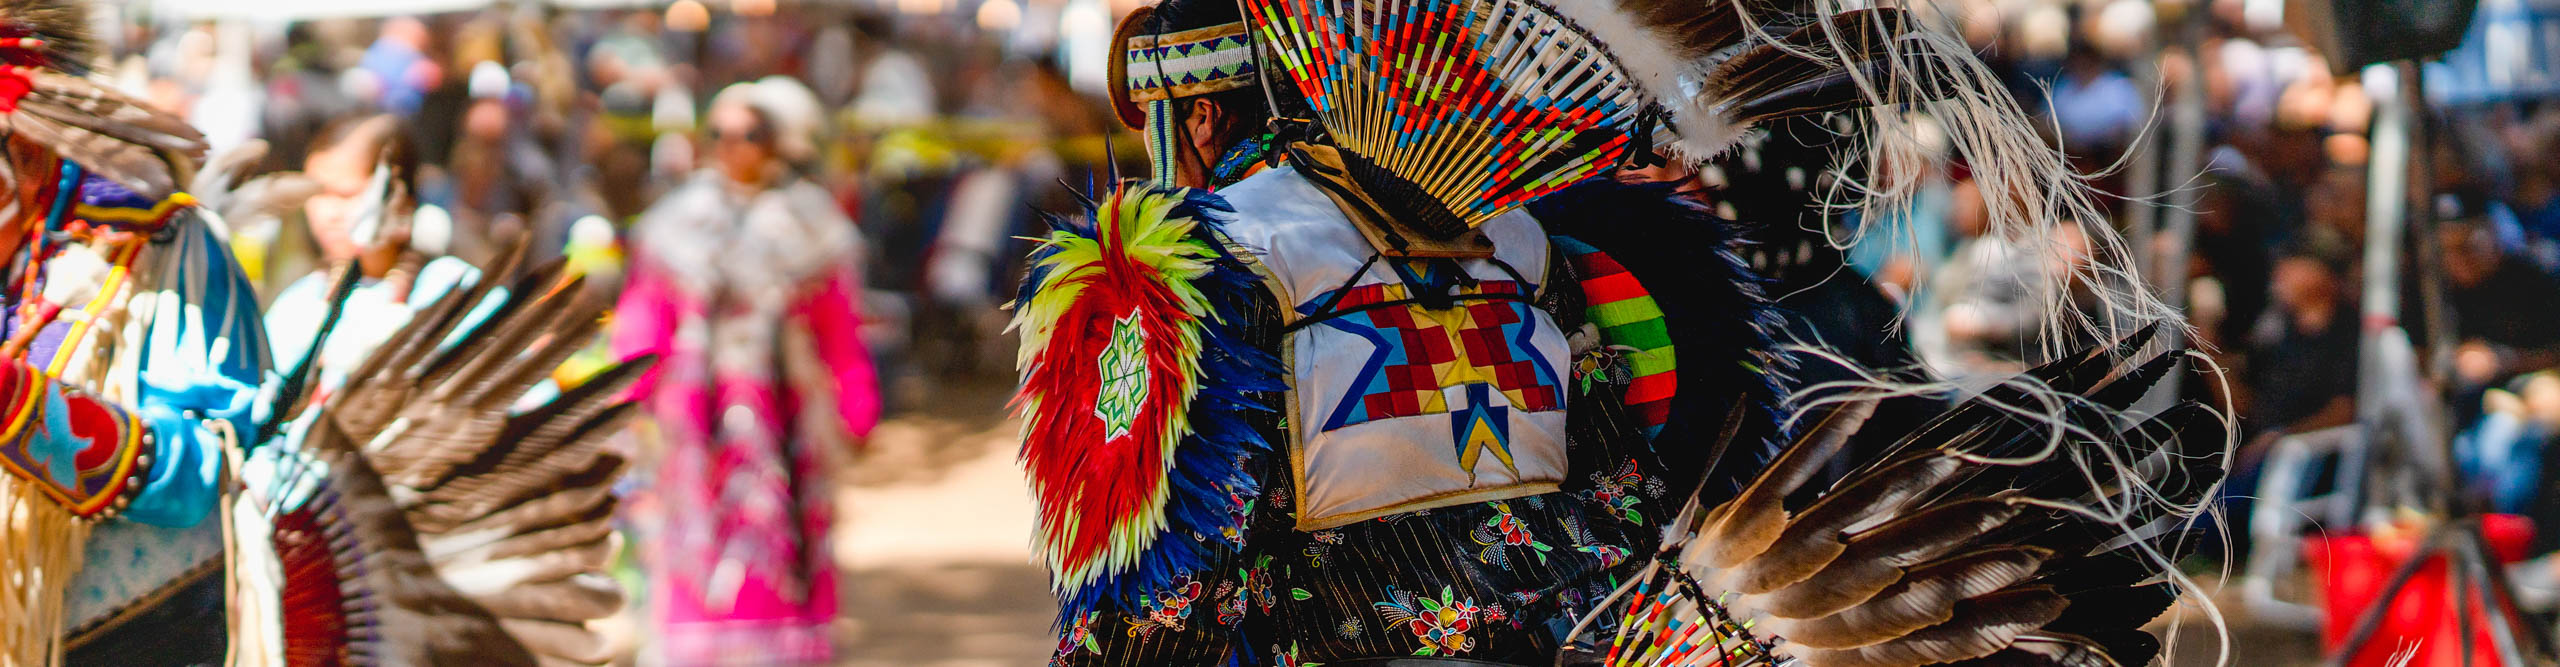 Native American in traditional dress dancing at a Powwow in South Dakota 